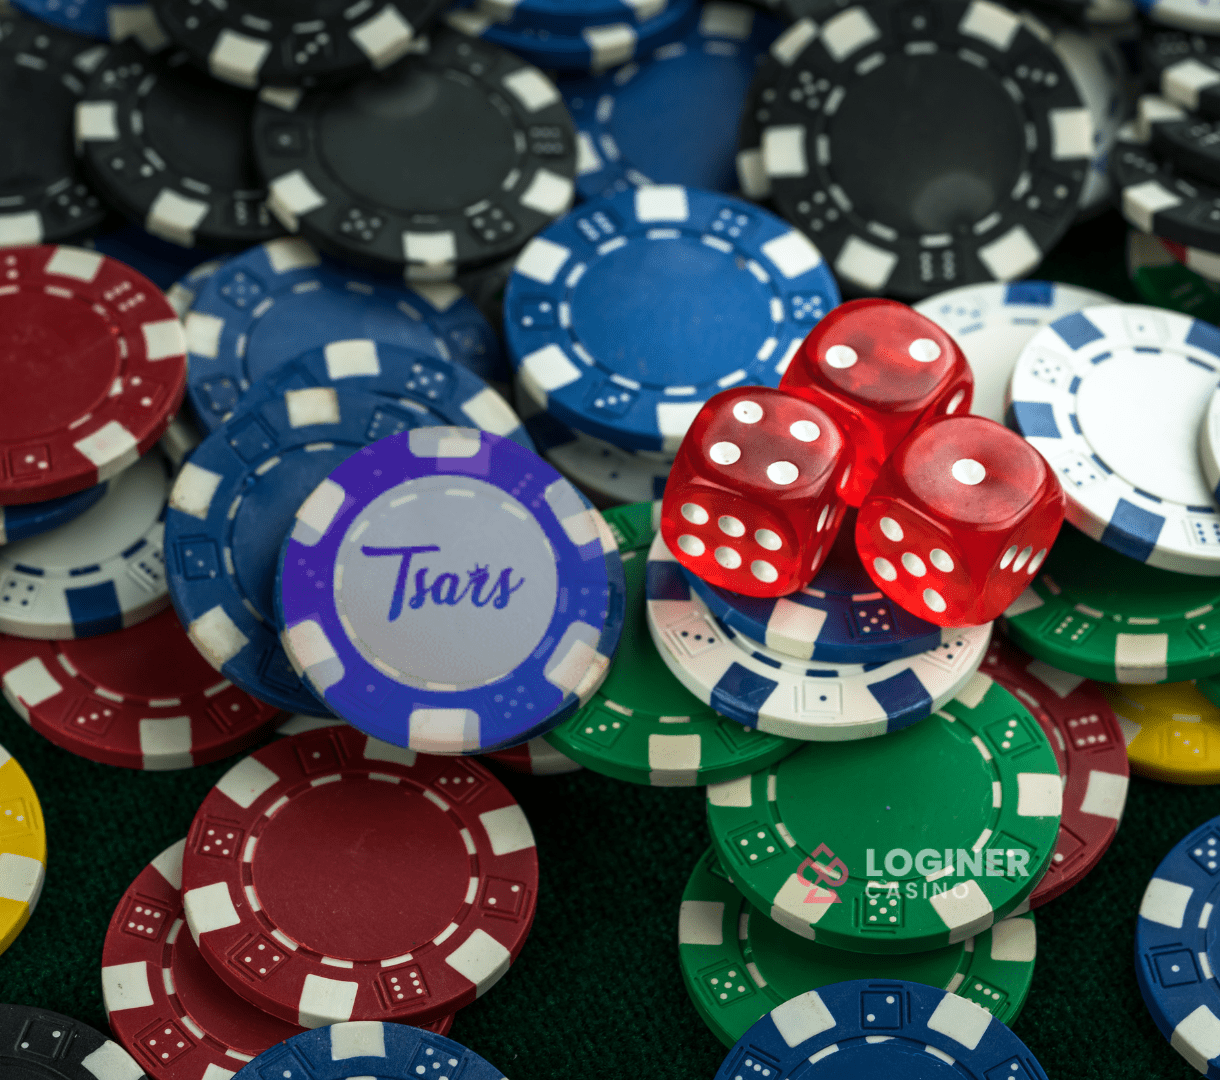 Tsars Casino Online: How to Begin